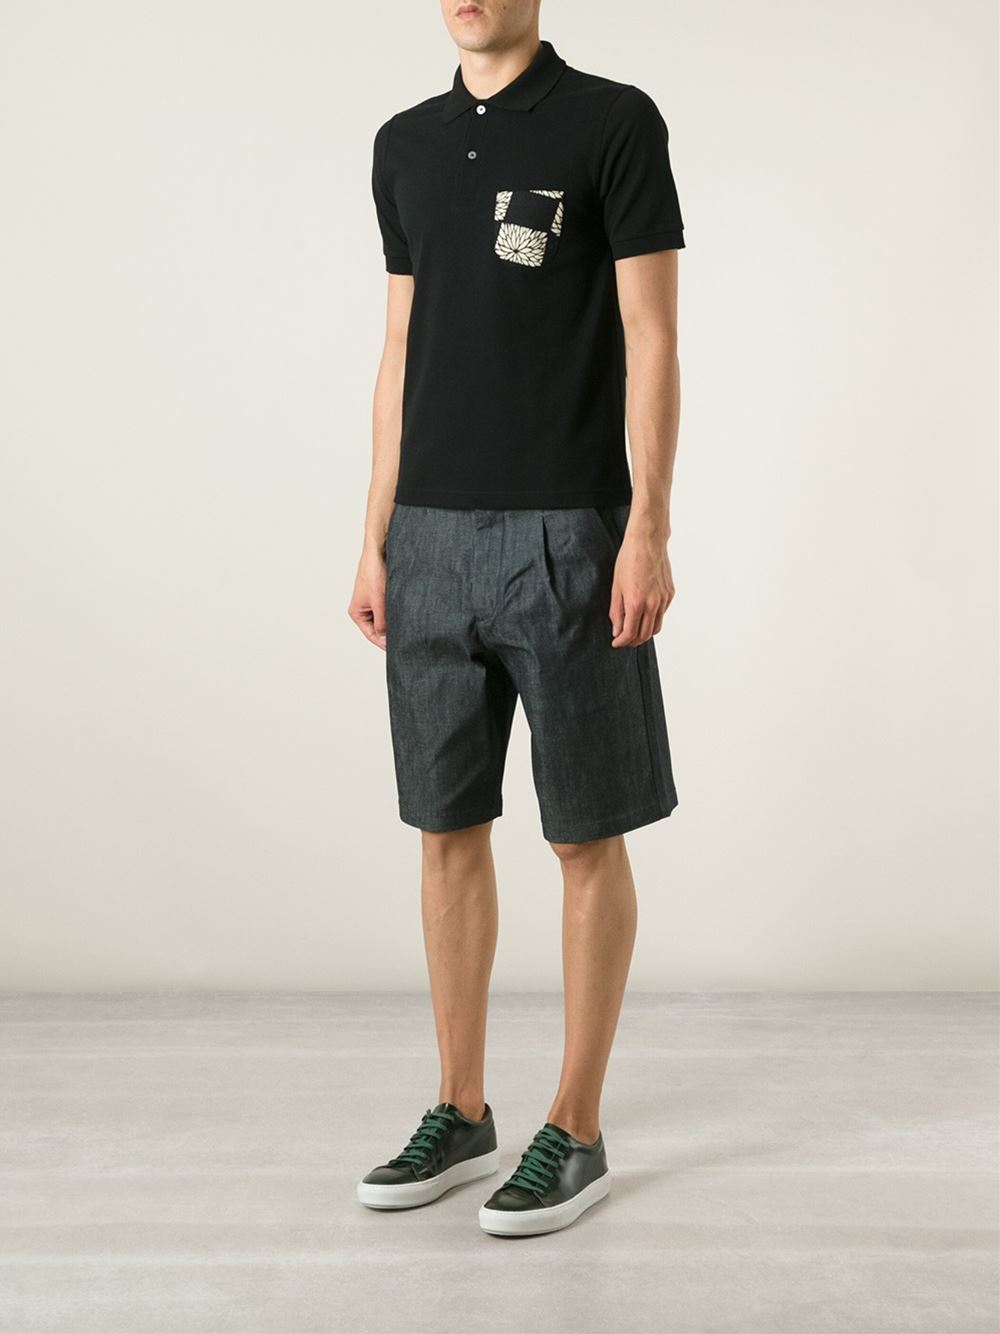 Raf Simons Floral-Pocket Cotton Polo Shirt in Black for Men - Lyst